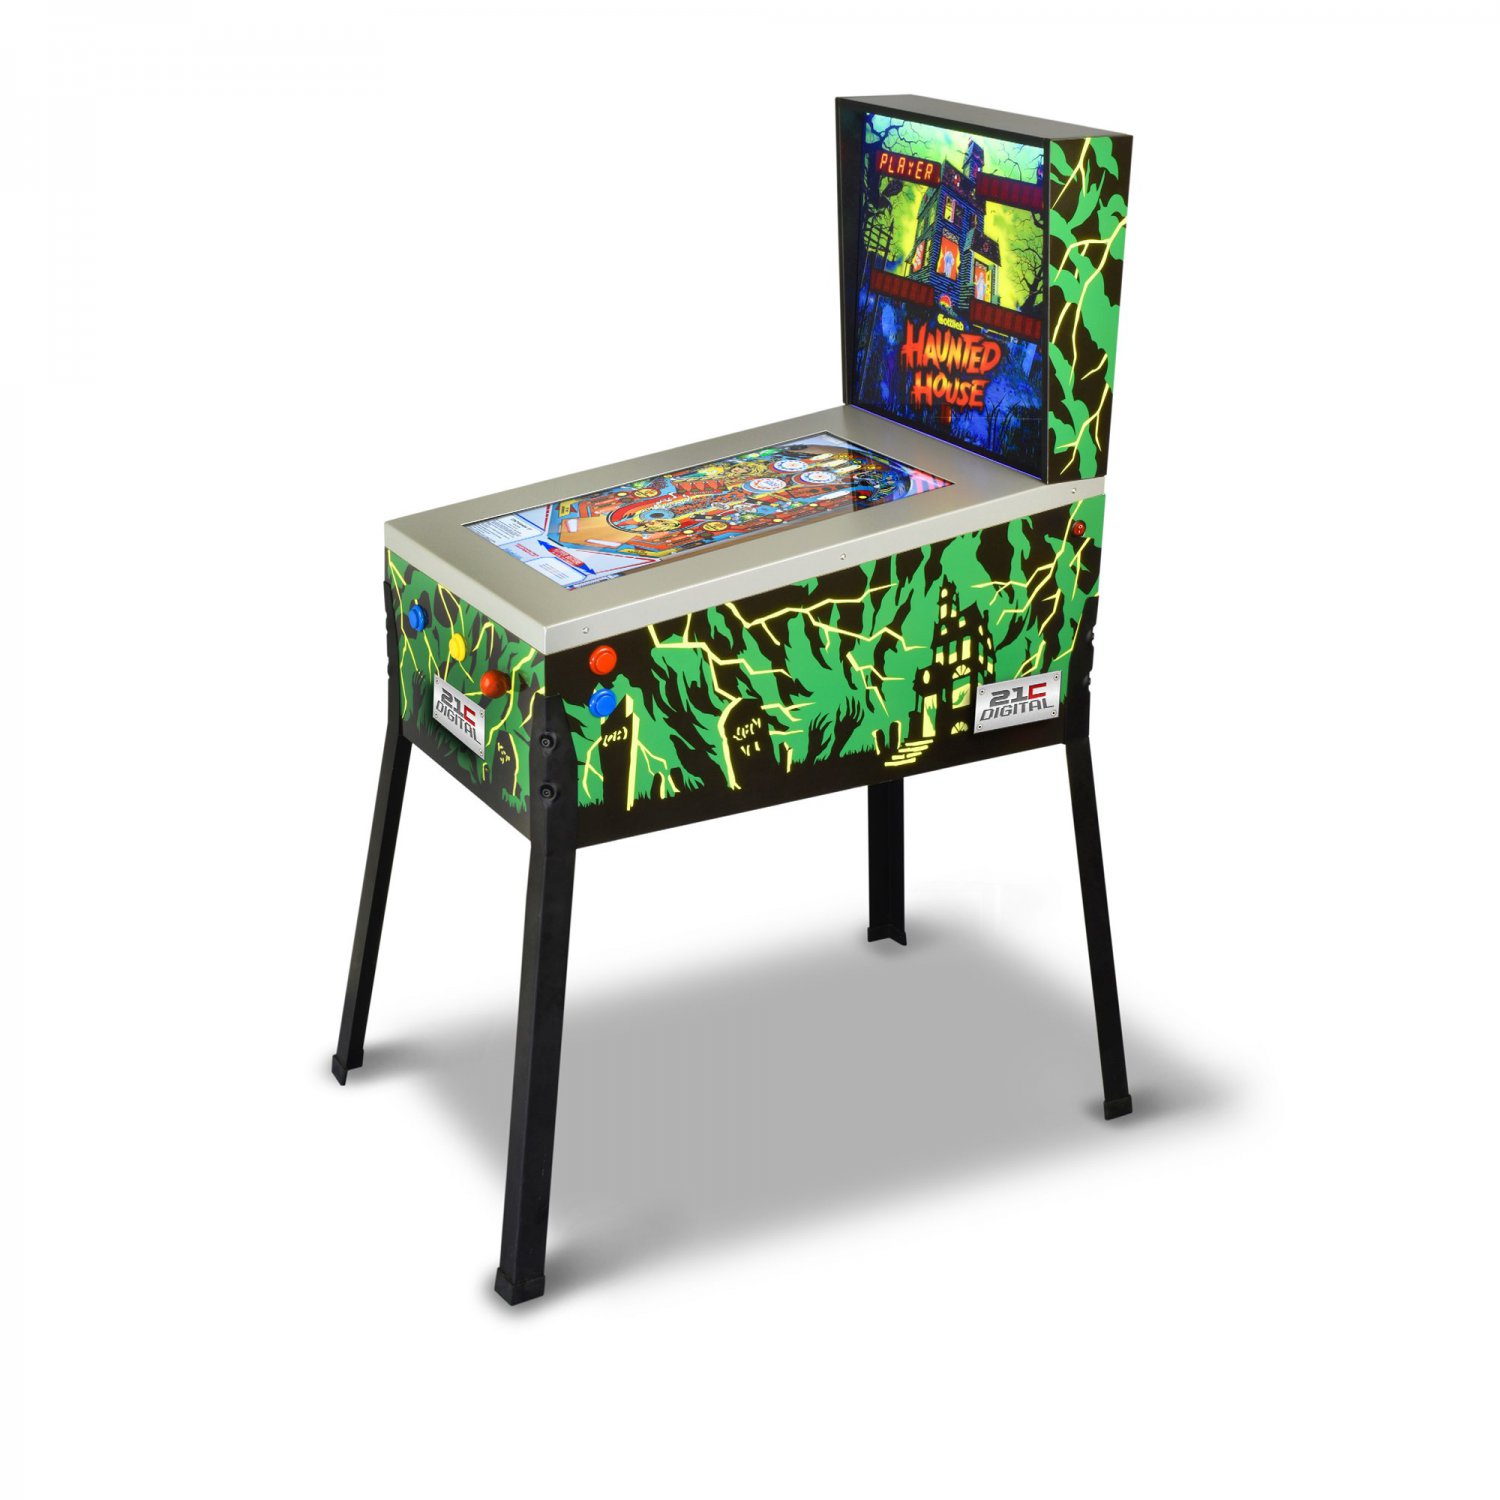 Haunted House3D Digital Pinball Machine, 12-in-1 Gottlieb Titles, ToyShock, 77000